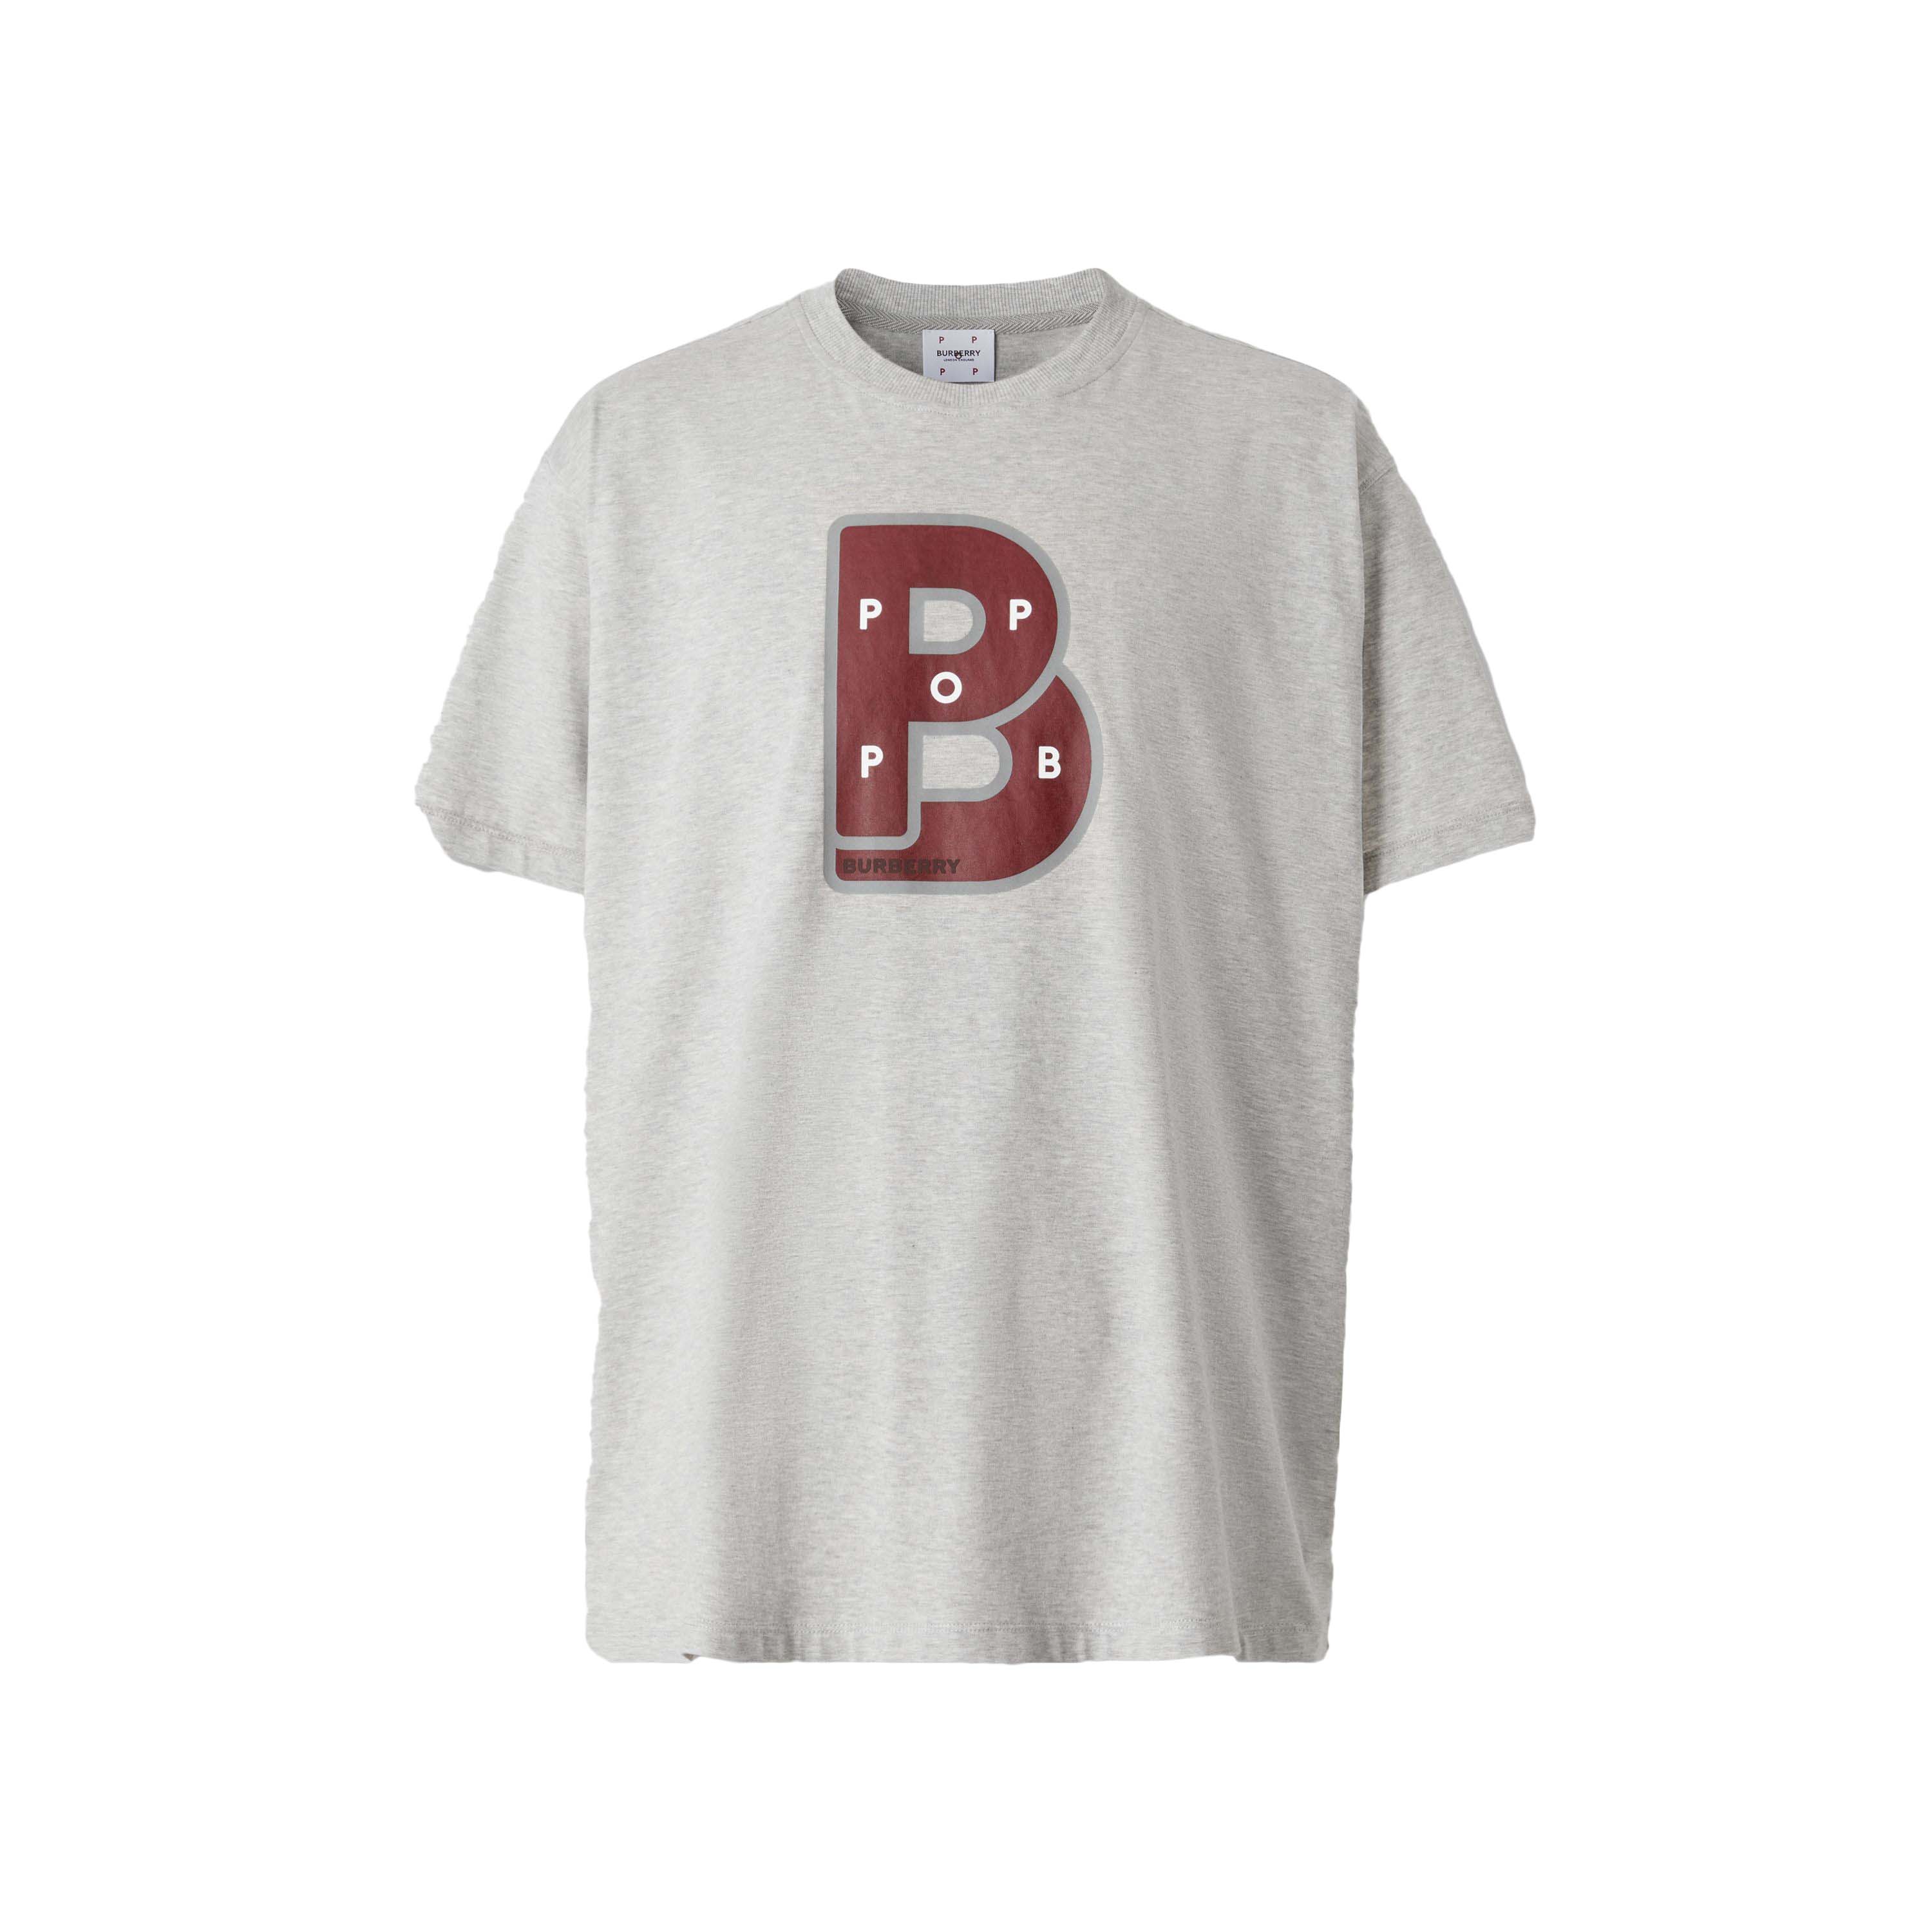 BURBERRY - Cotton T-shirt